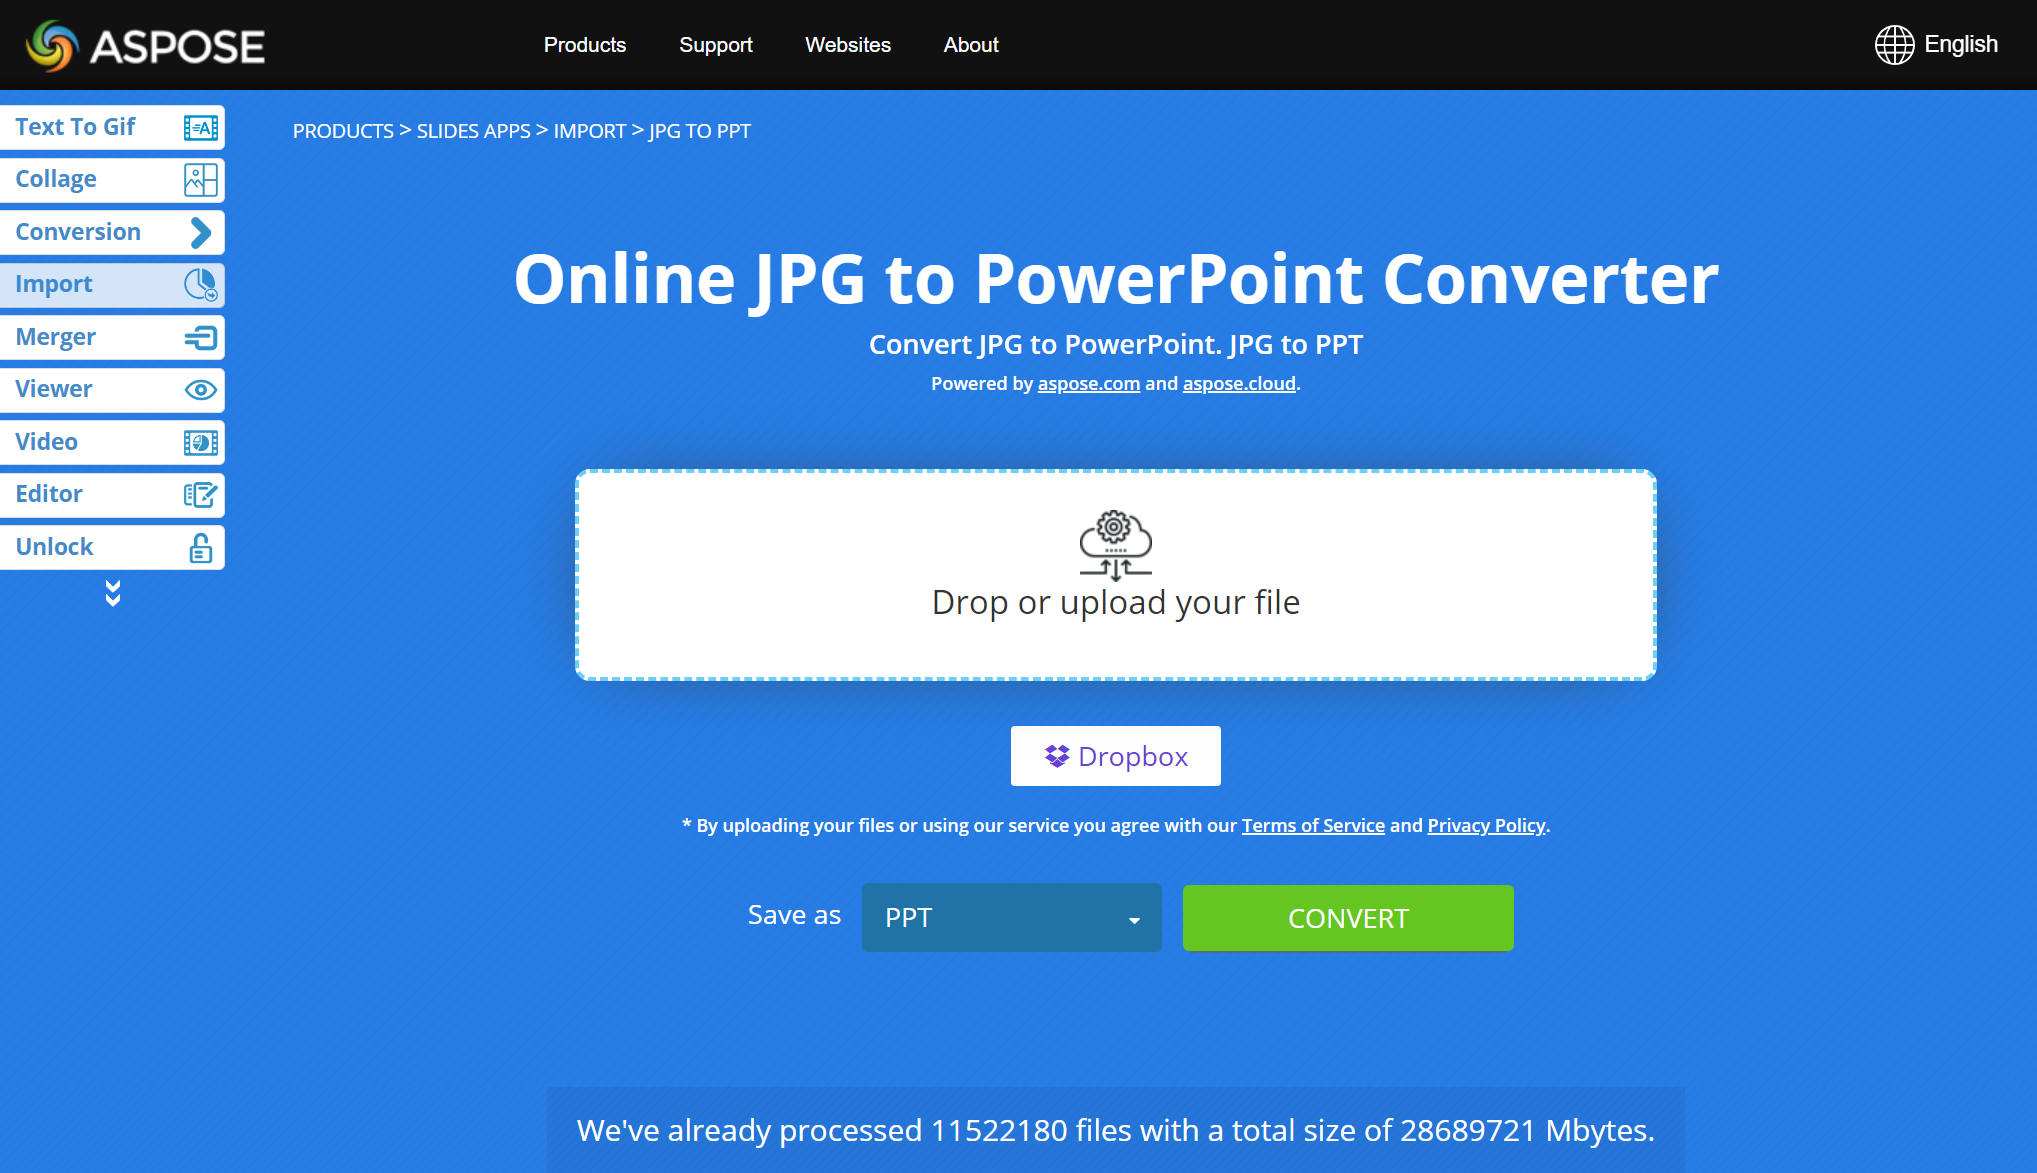 Anggap Konverter JPG ke PPT Online